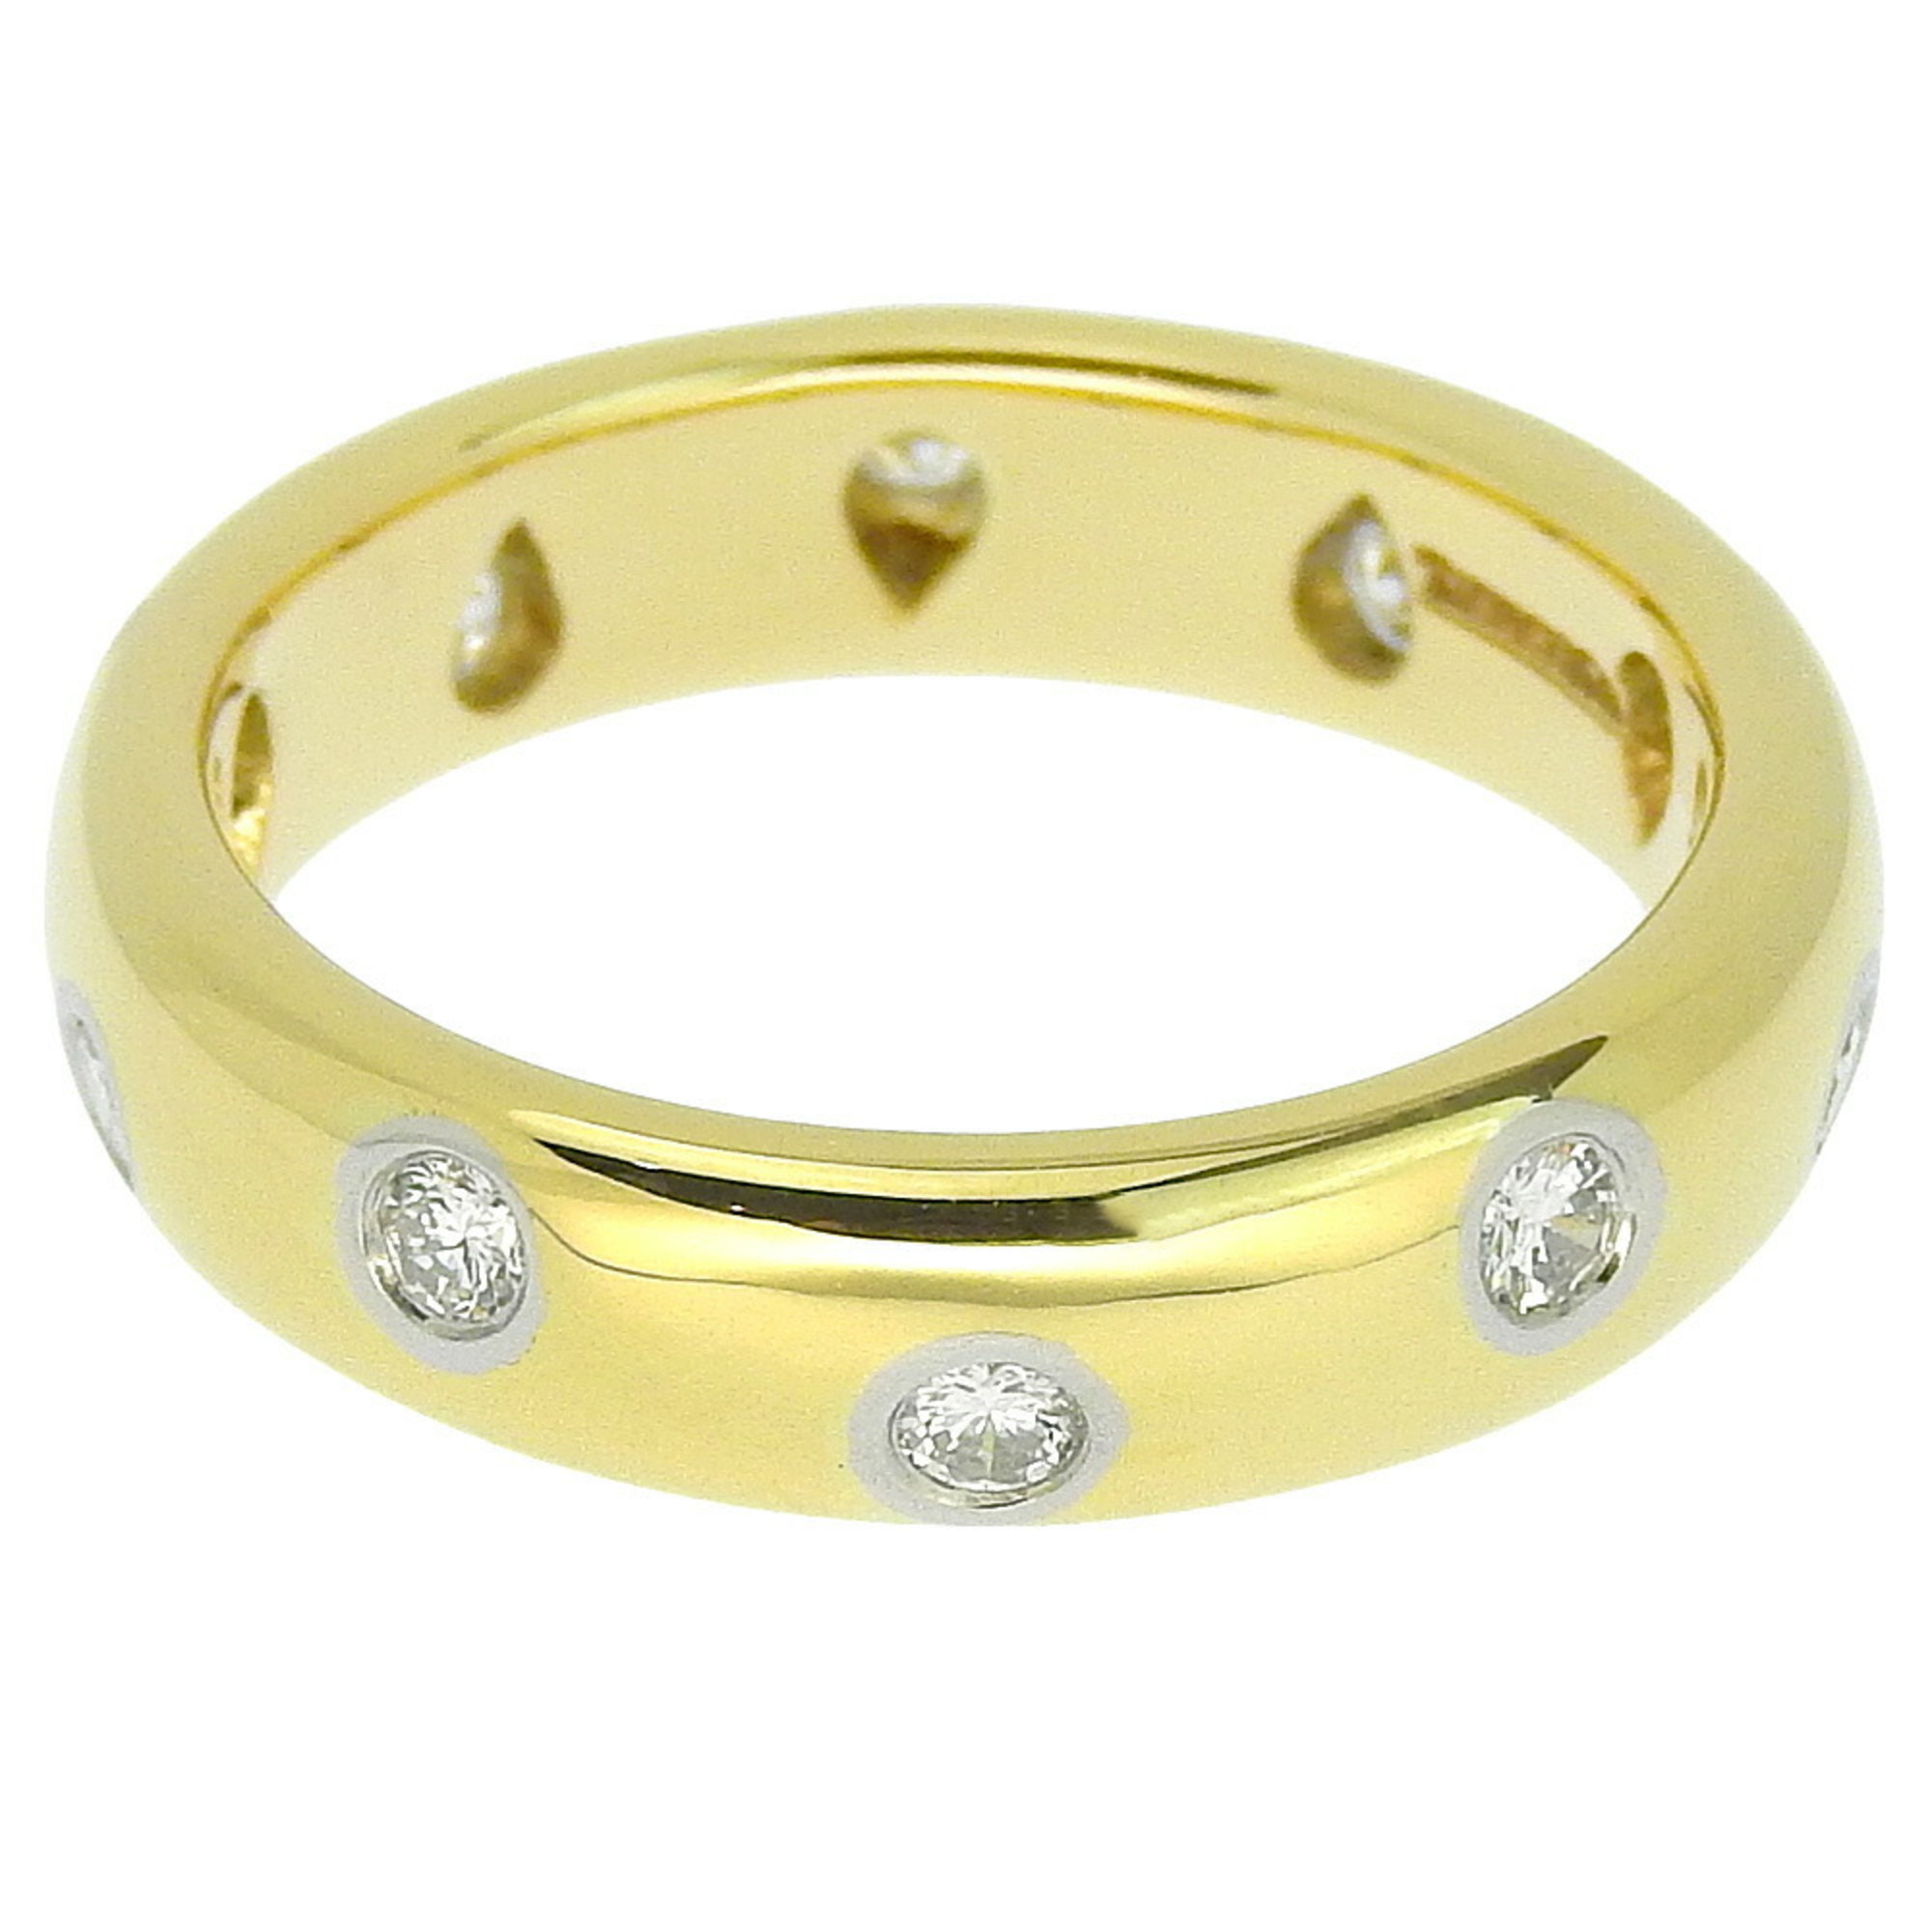 Tiffany & Co. Dots size 9 ring, K18 yellow gold x Pt950 platinum diamond, approx. 5.7g, Dots, women's